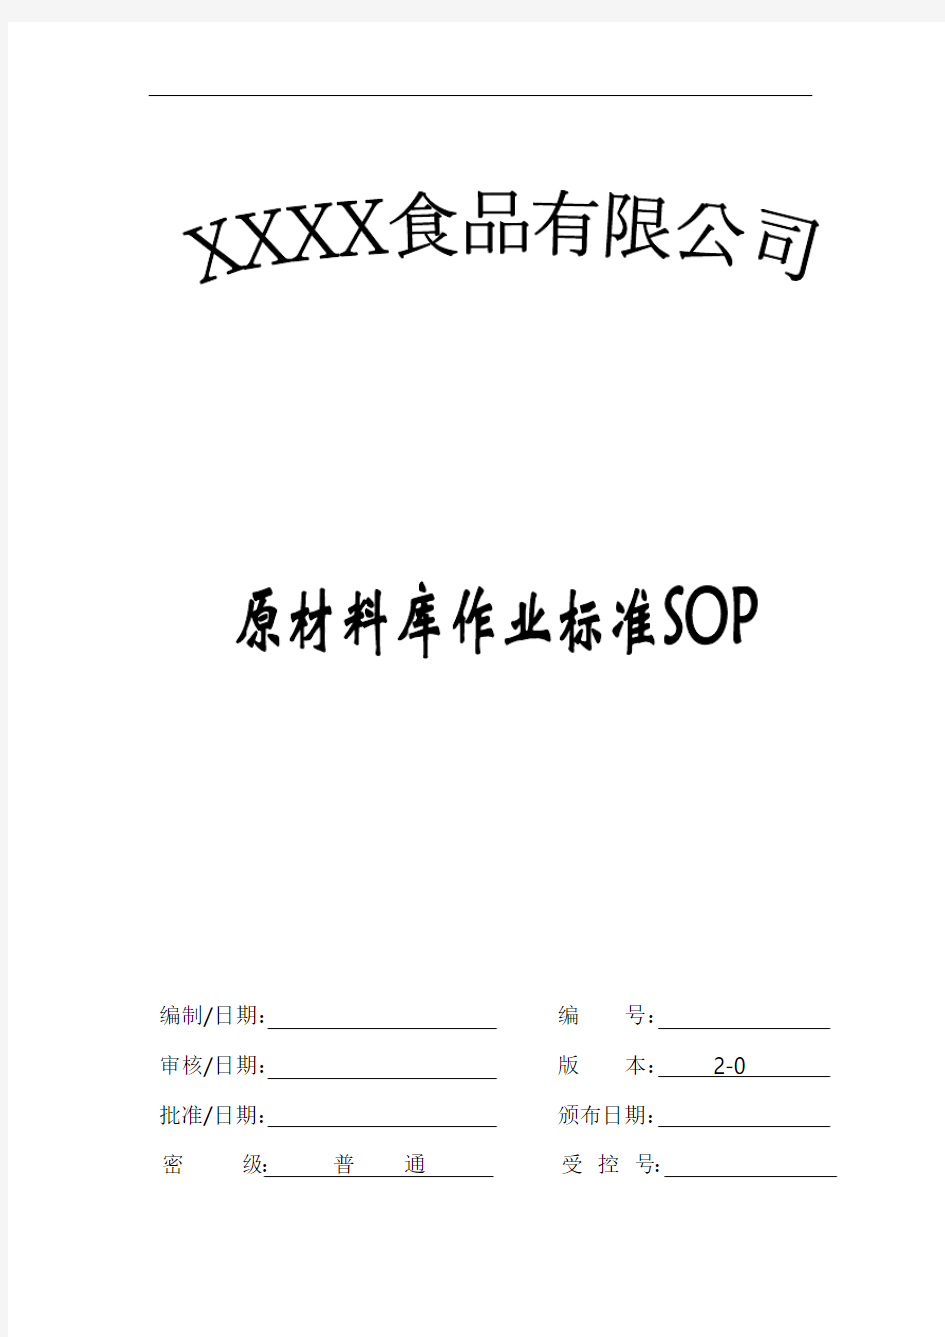 XXXX食品有限公司原材料库作业标准SOP